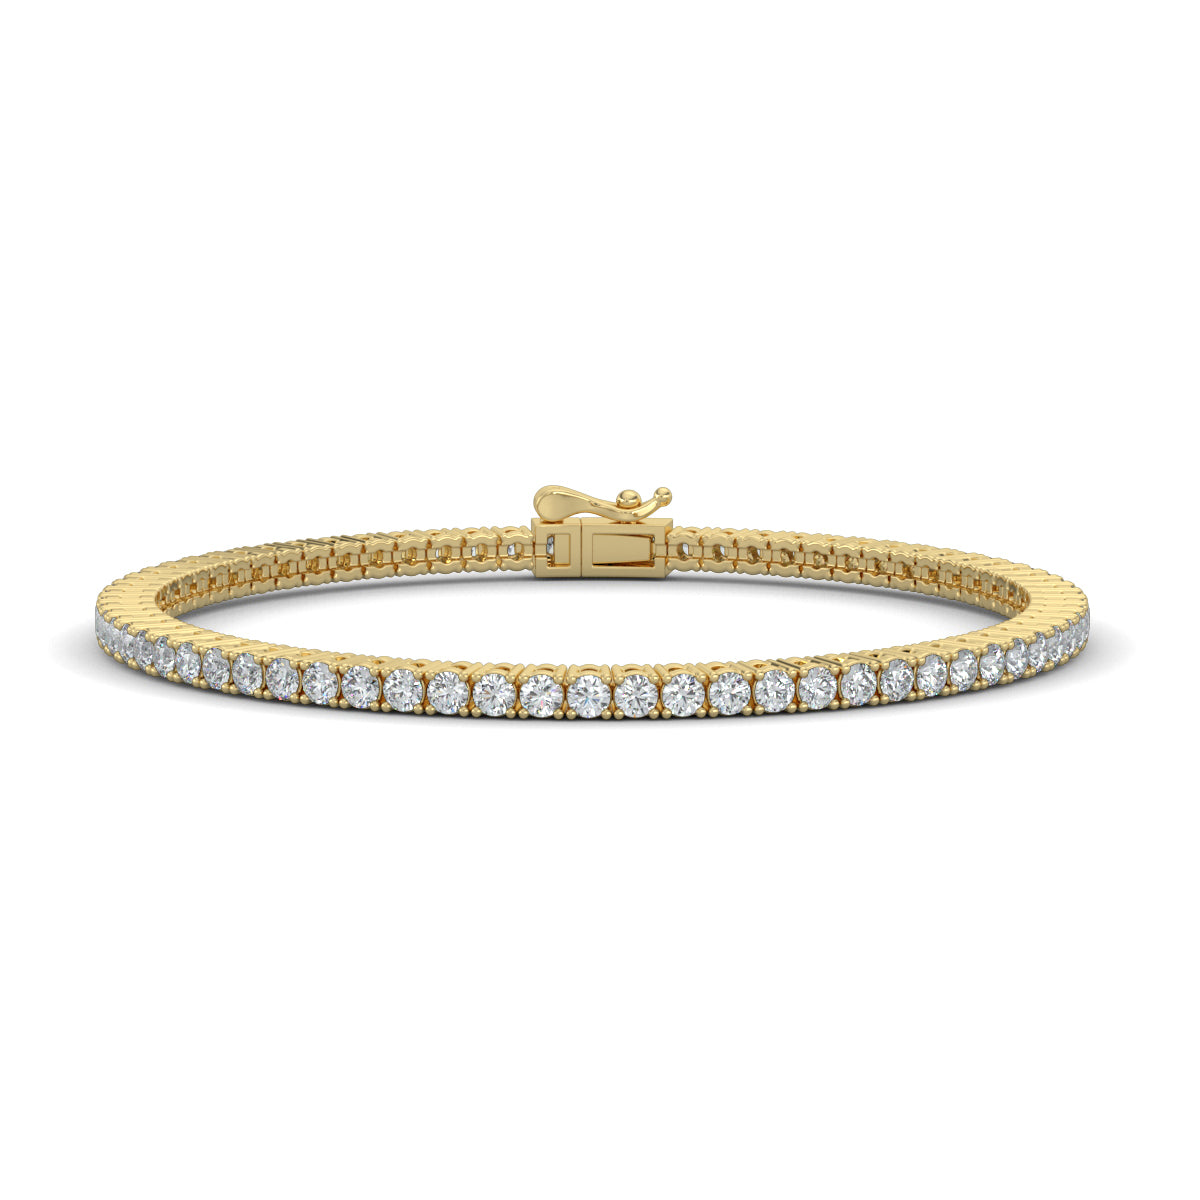 Yellow Gold, Diamond Bracelet, Natural diamond bracelet, Lab-grown diamond bracelet, 8-Pointer Tennis Bracelet, tennis bracelet, prong setting, jewelry